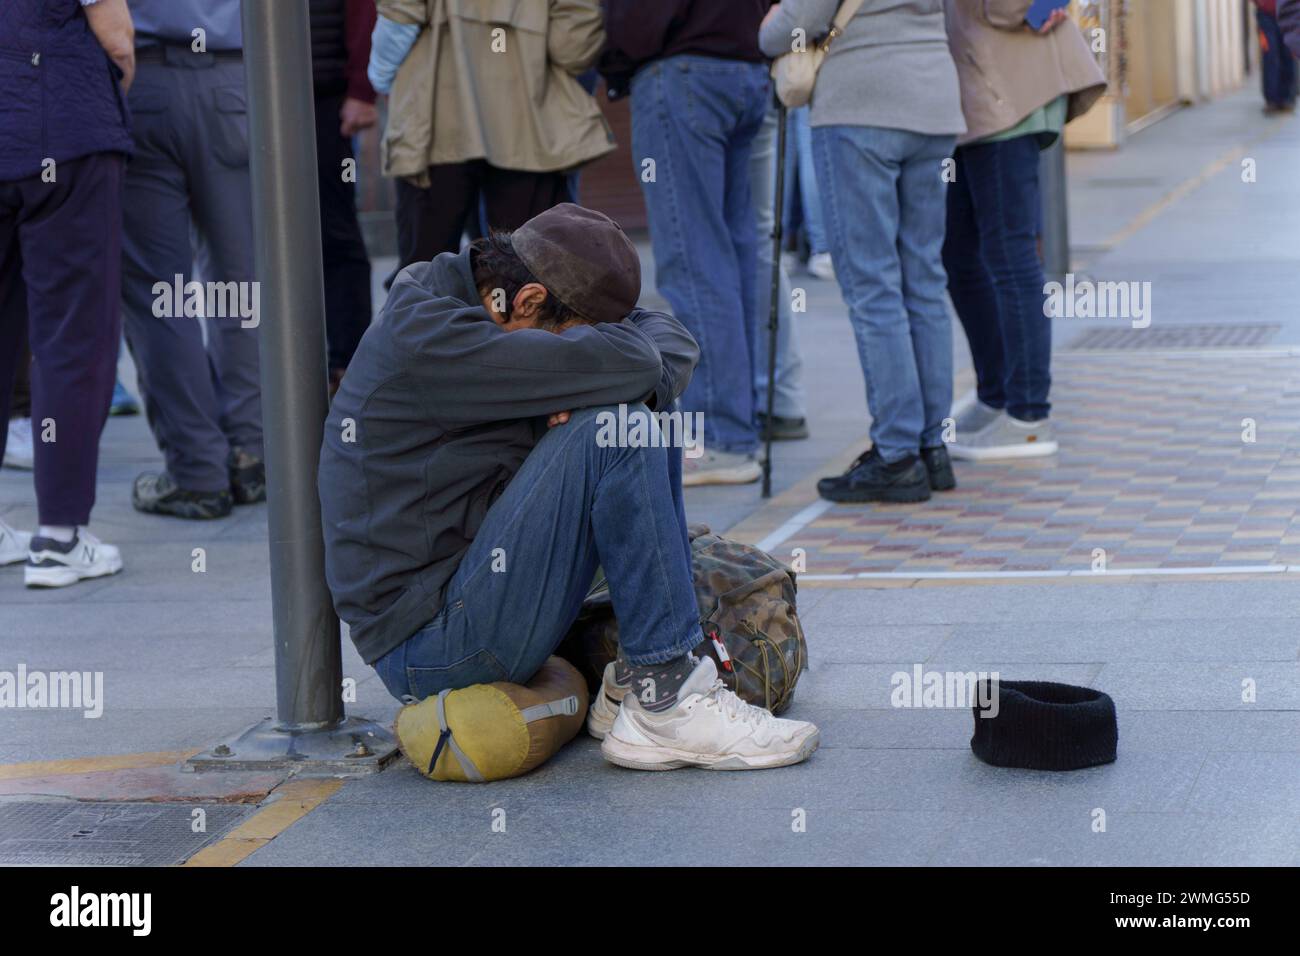 homeless man on the street begging for alms Stock Photo